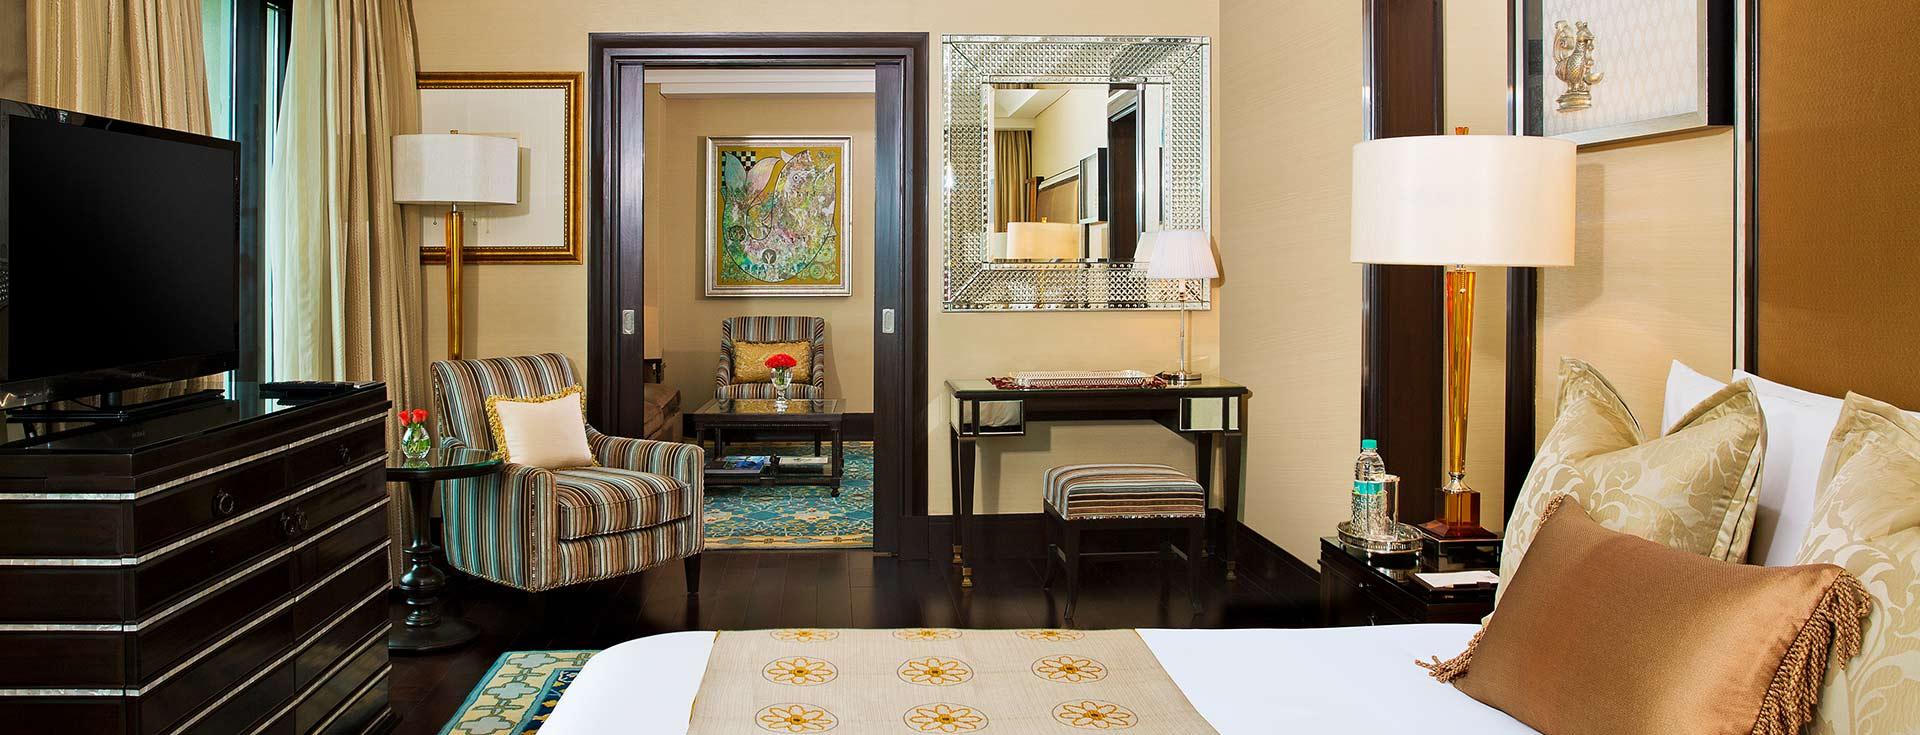 Executive Suite - Leela Chennai Hotel